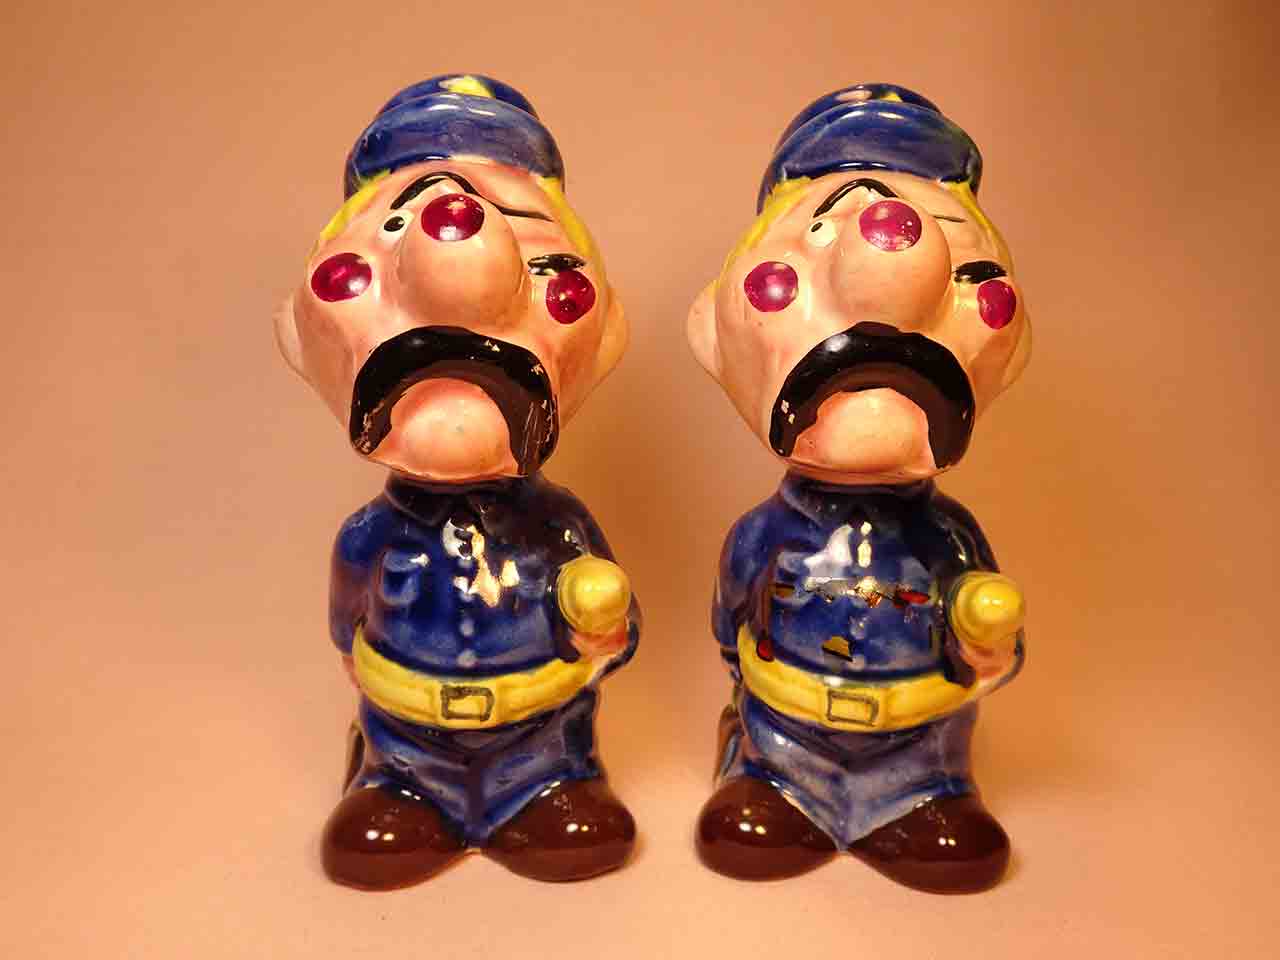 Clown-like strange fellows salt and pepper shakers - police officers